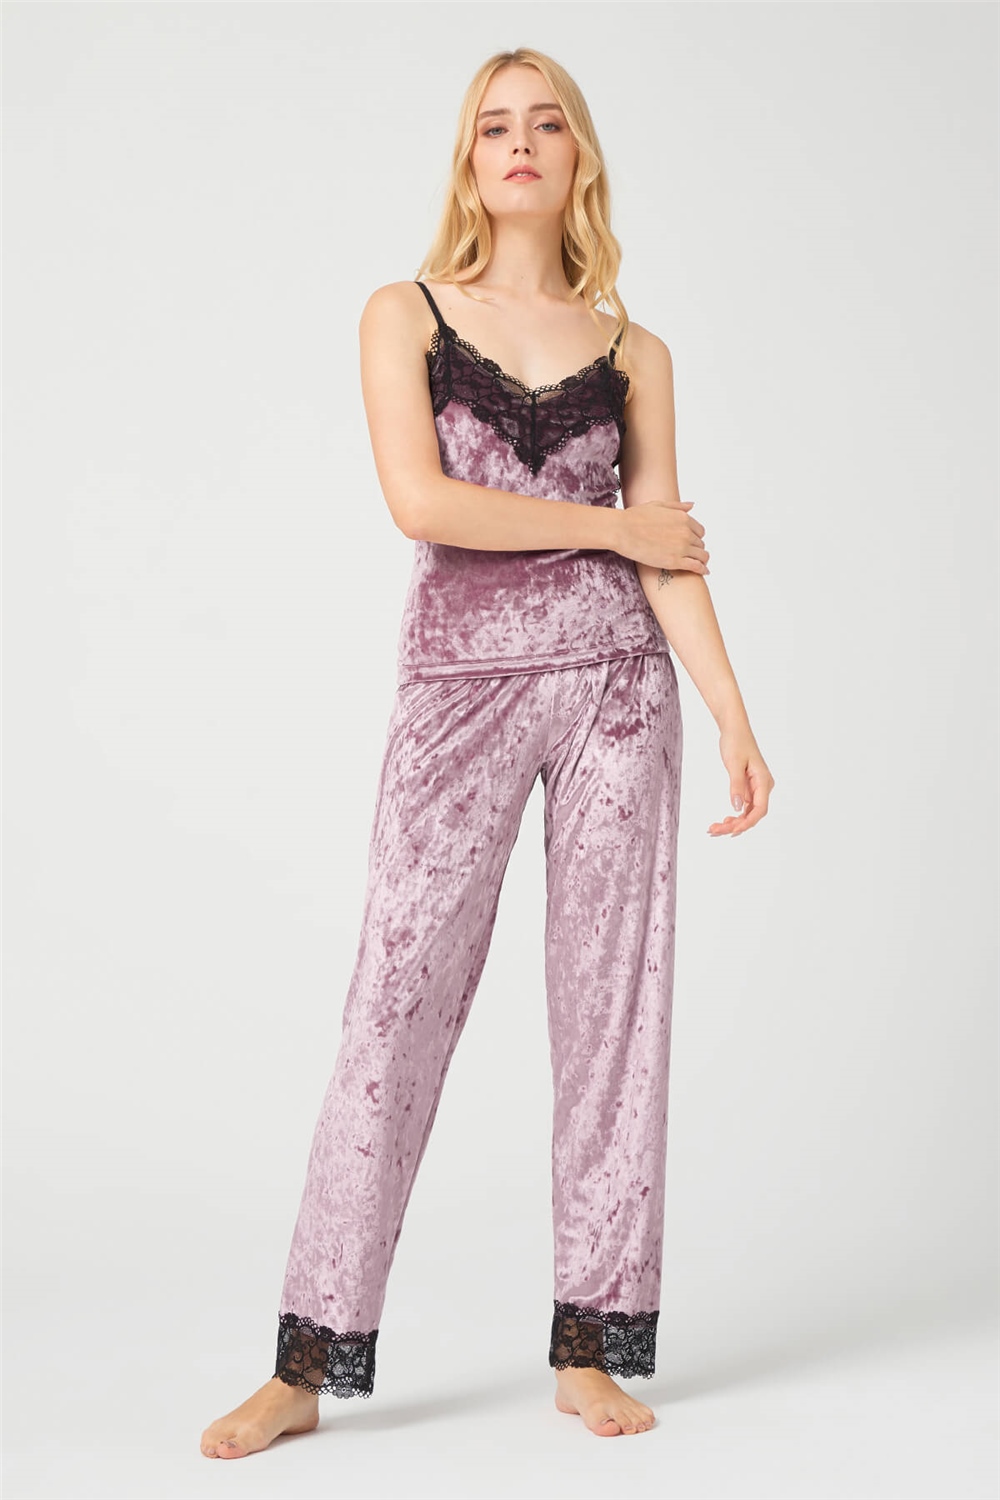 velvet-pajama-set-with-lace-detail-ch1500-powder-1-2